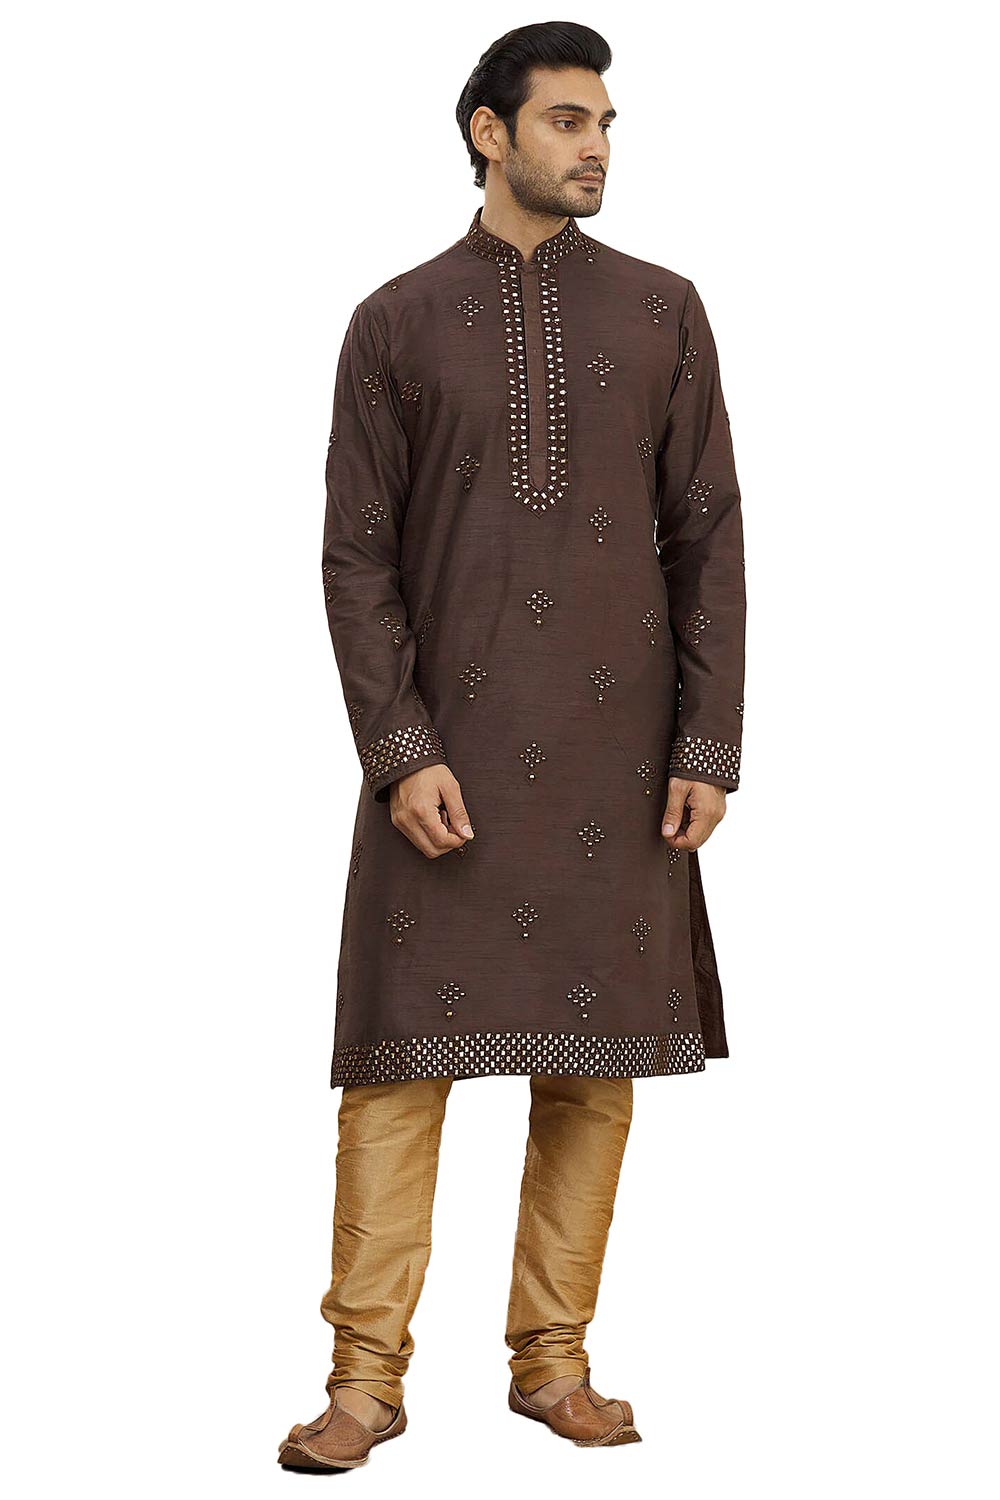 Men's Brown Silk Embroidered Full Sleeve Kurta Churidar